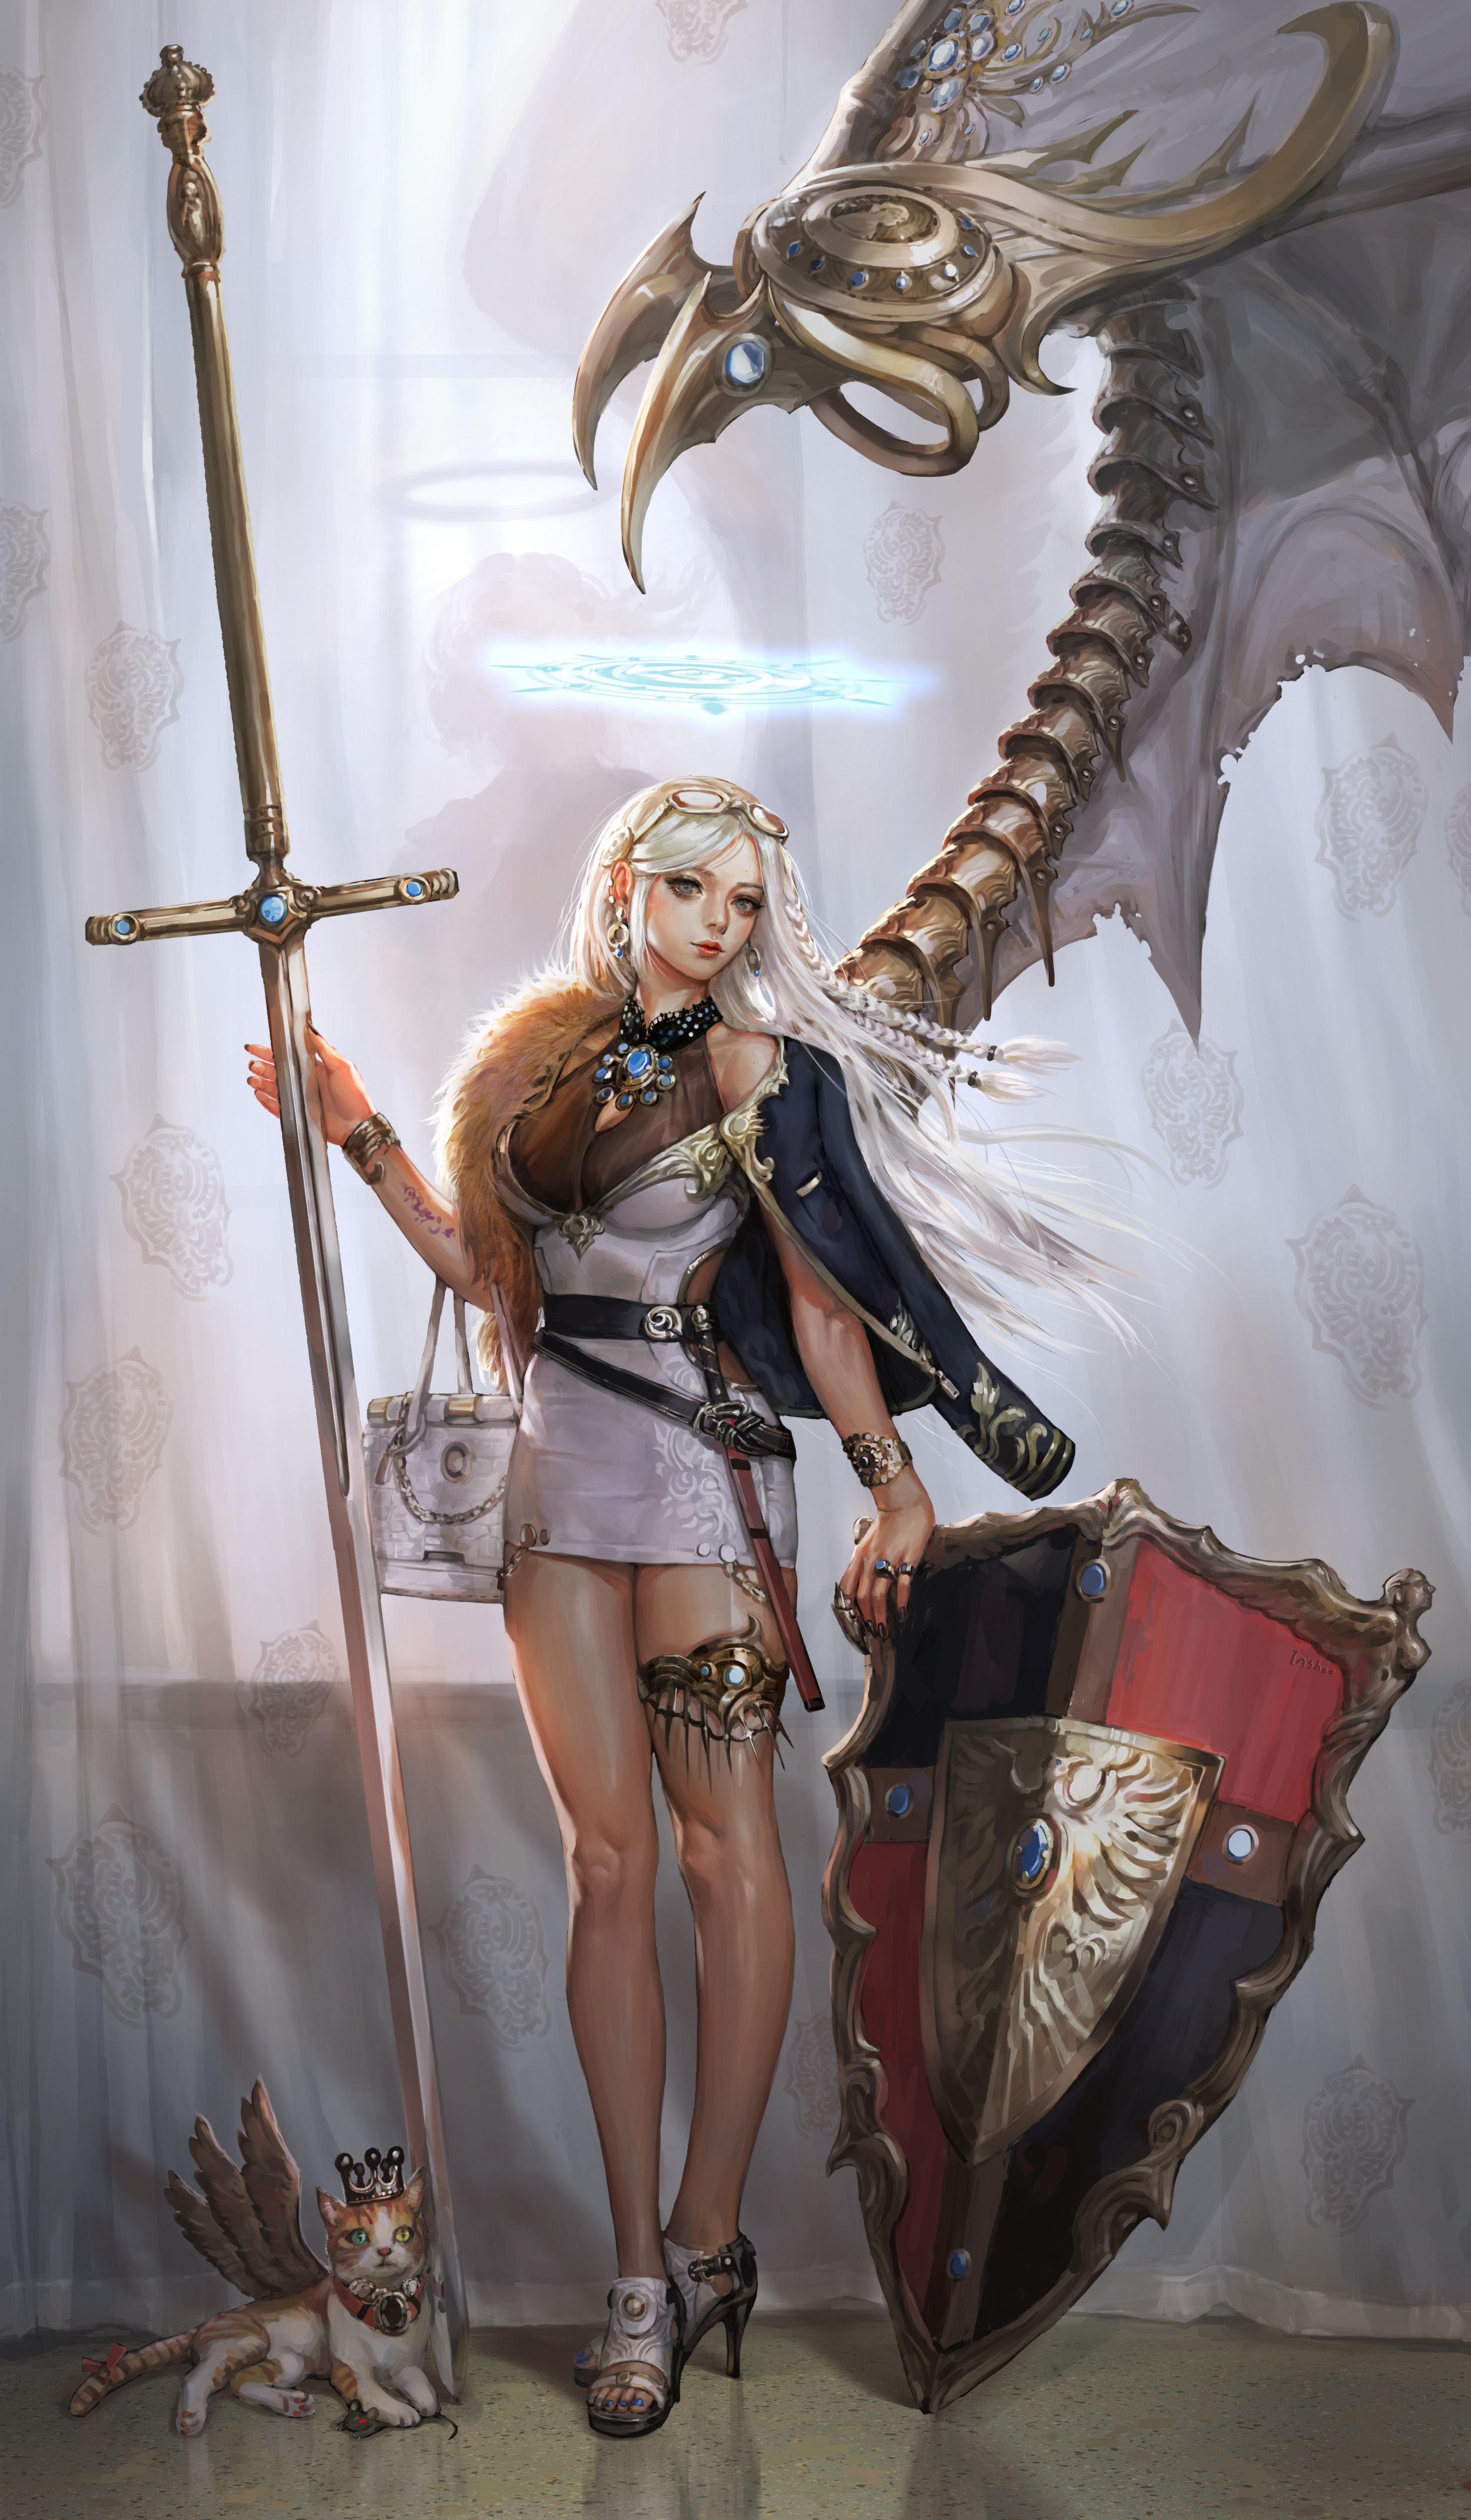 General 2498x4280 digital art women blonde warrior cats sword shield handbags legs high heels